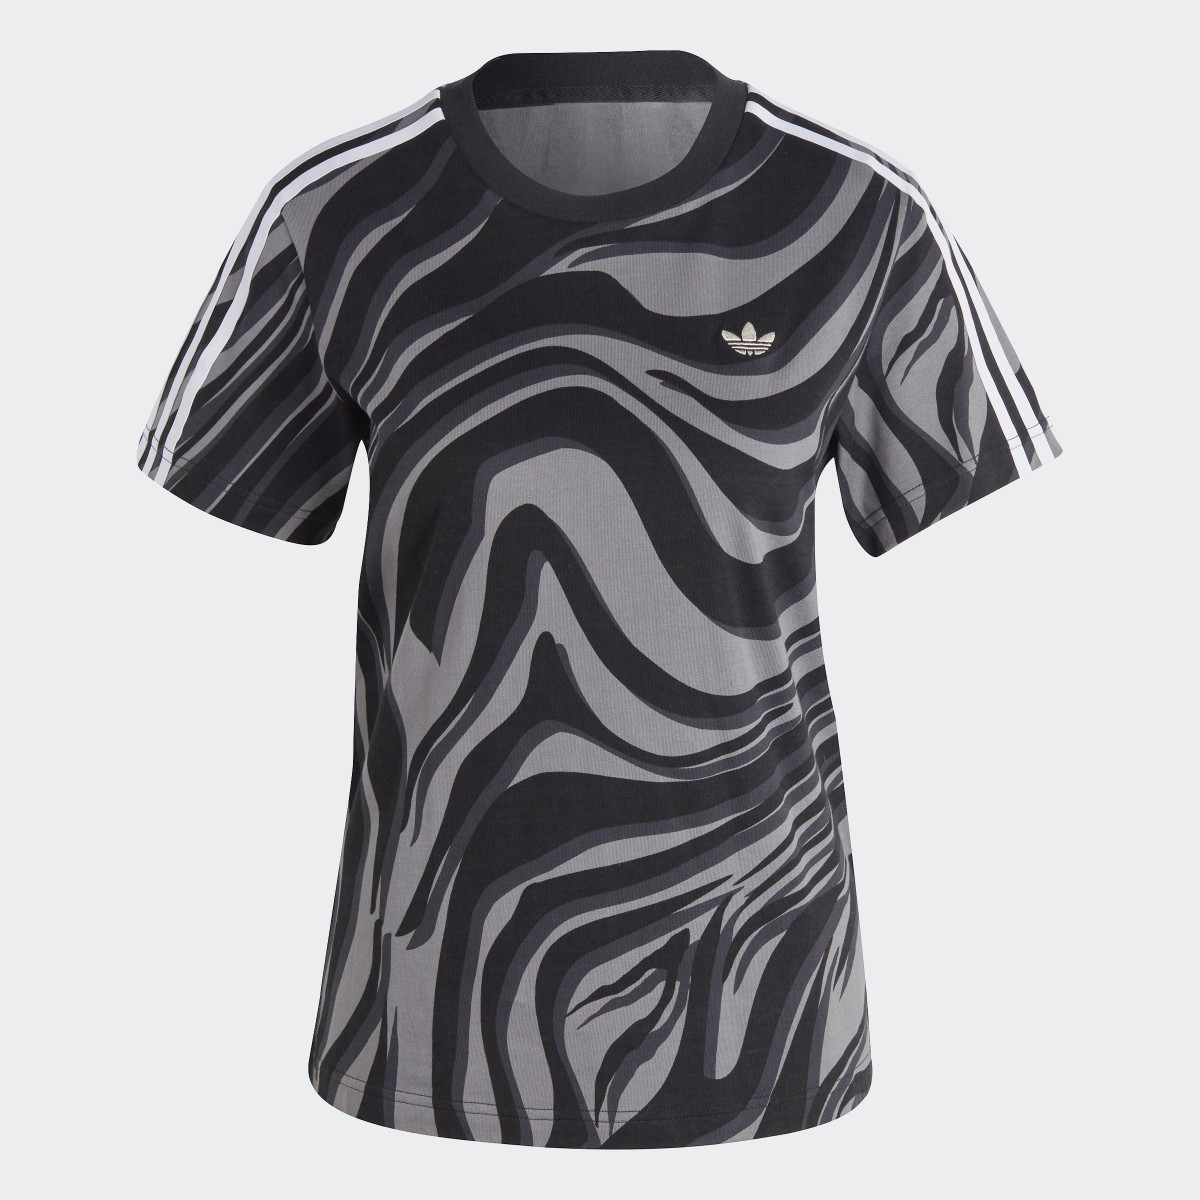 Adidas Camiseta Abstract Allover Animal Print. 5